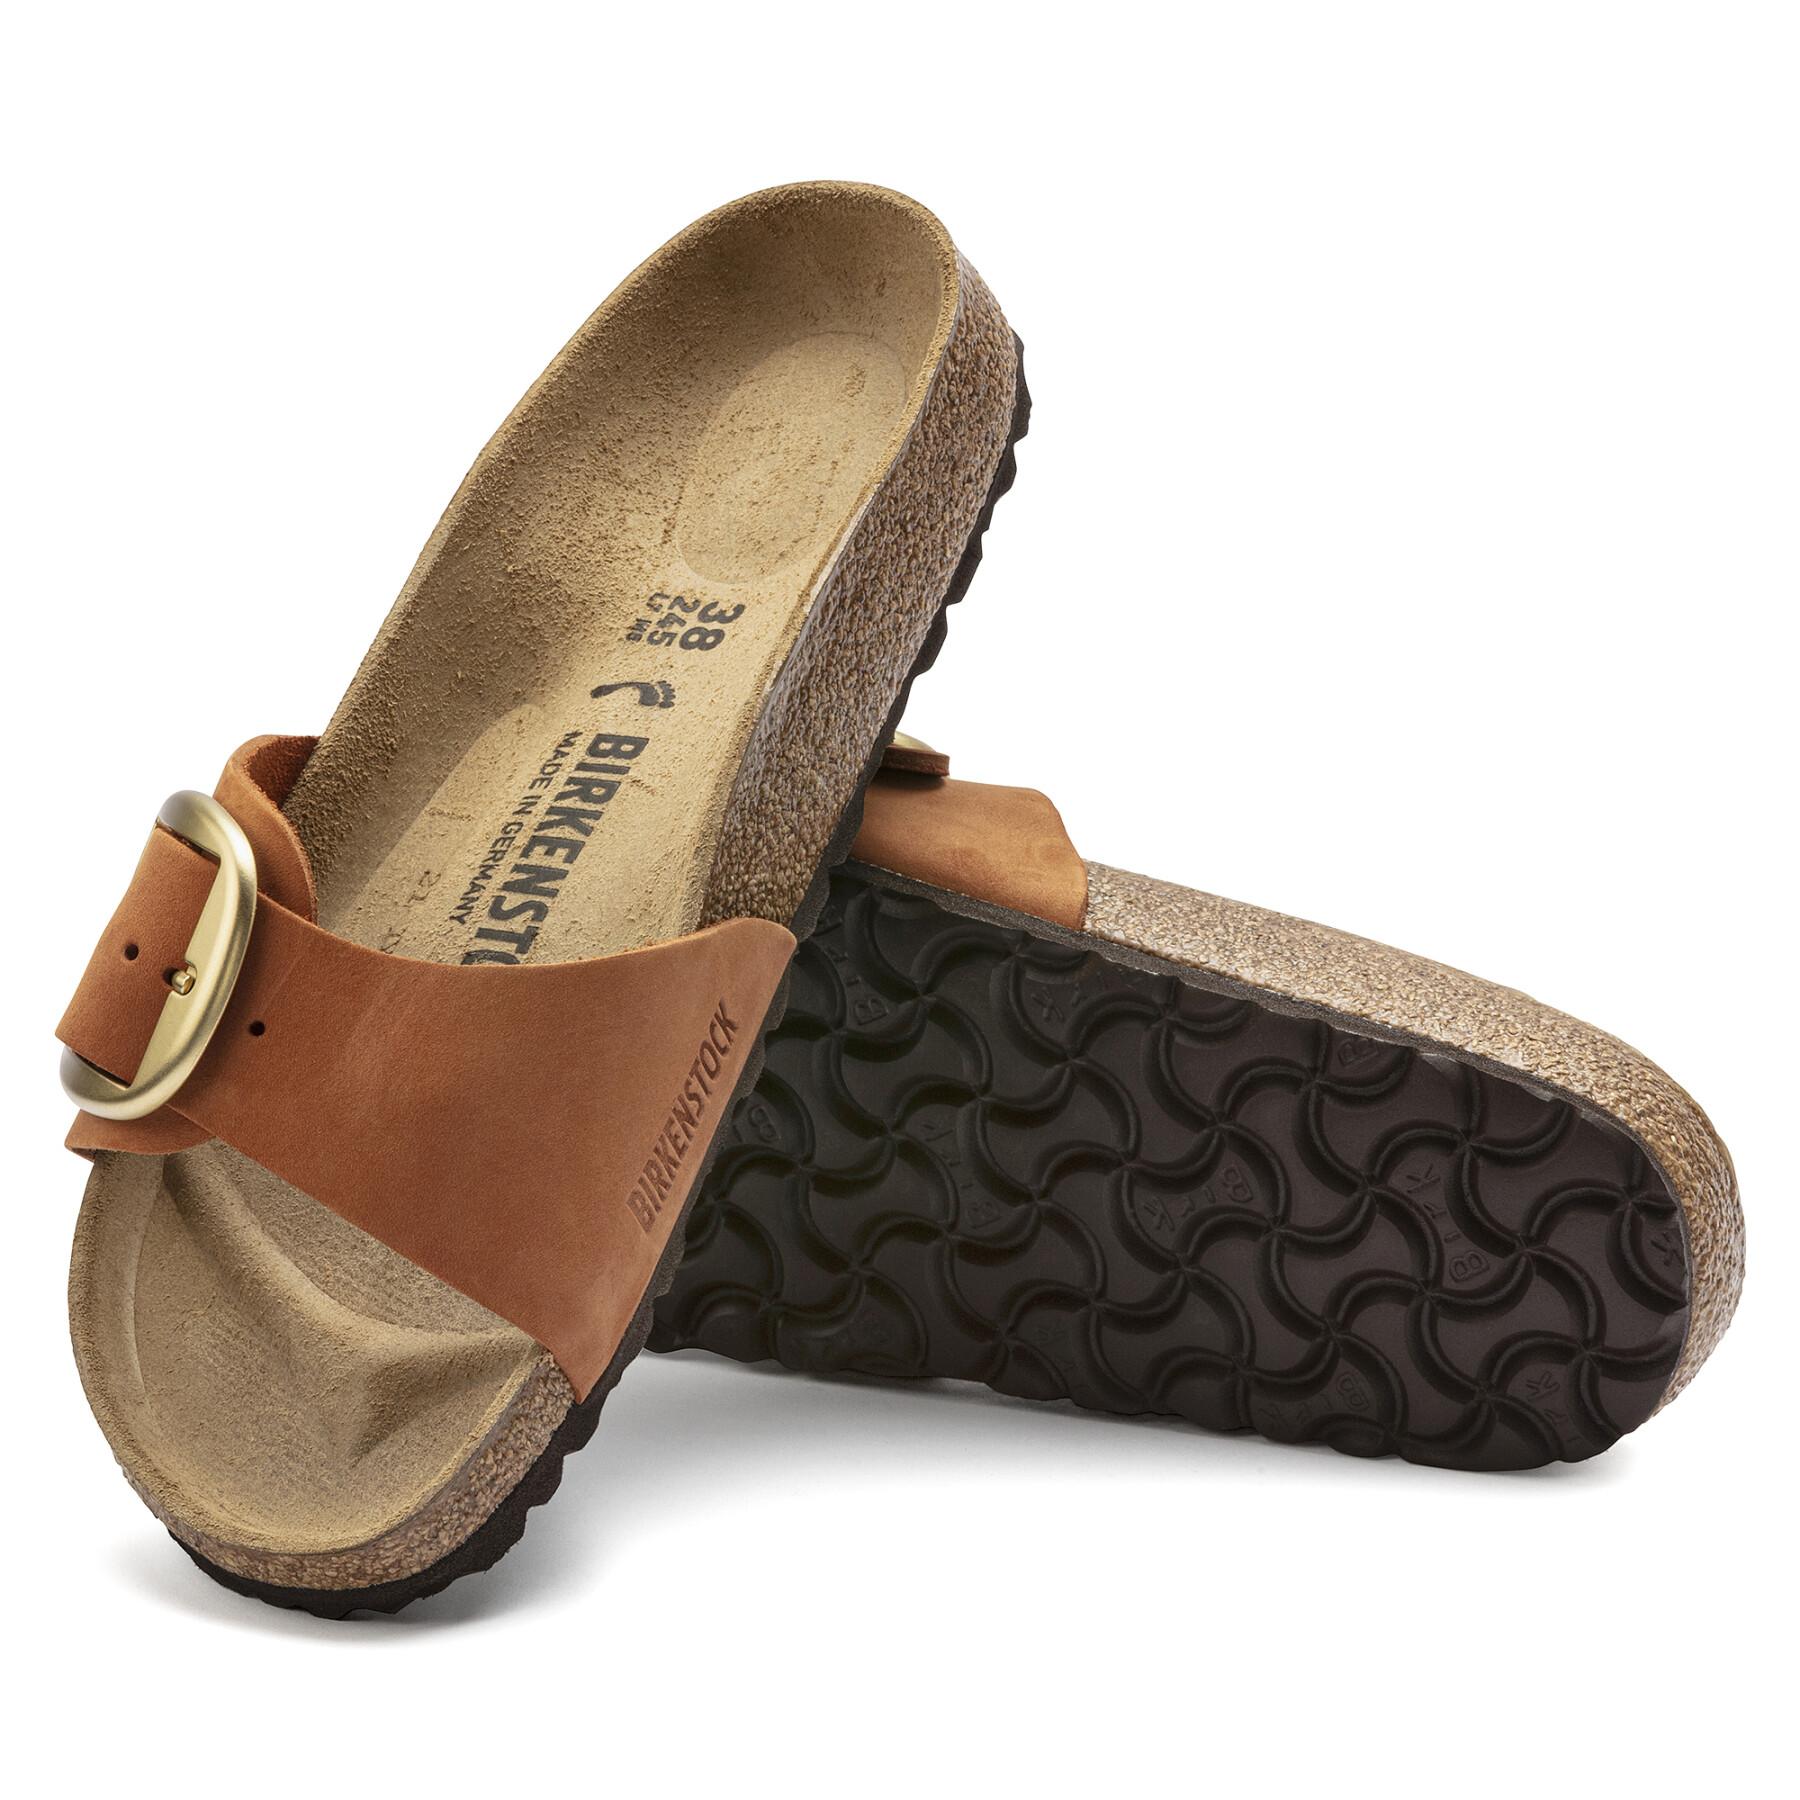 Women's sandals Birkenstock Madrid Big Buckle Natural Leather Nubuck Etroit